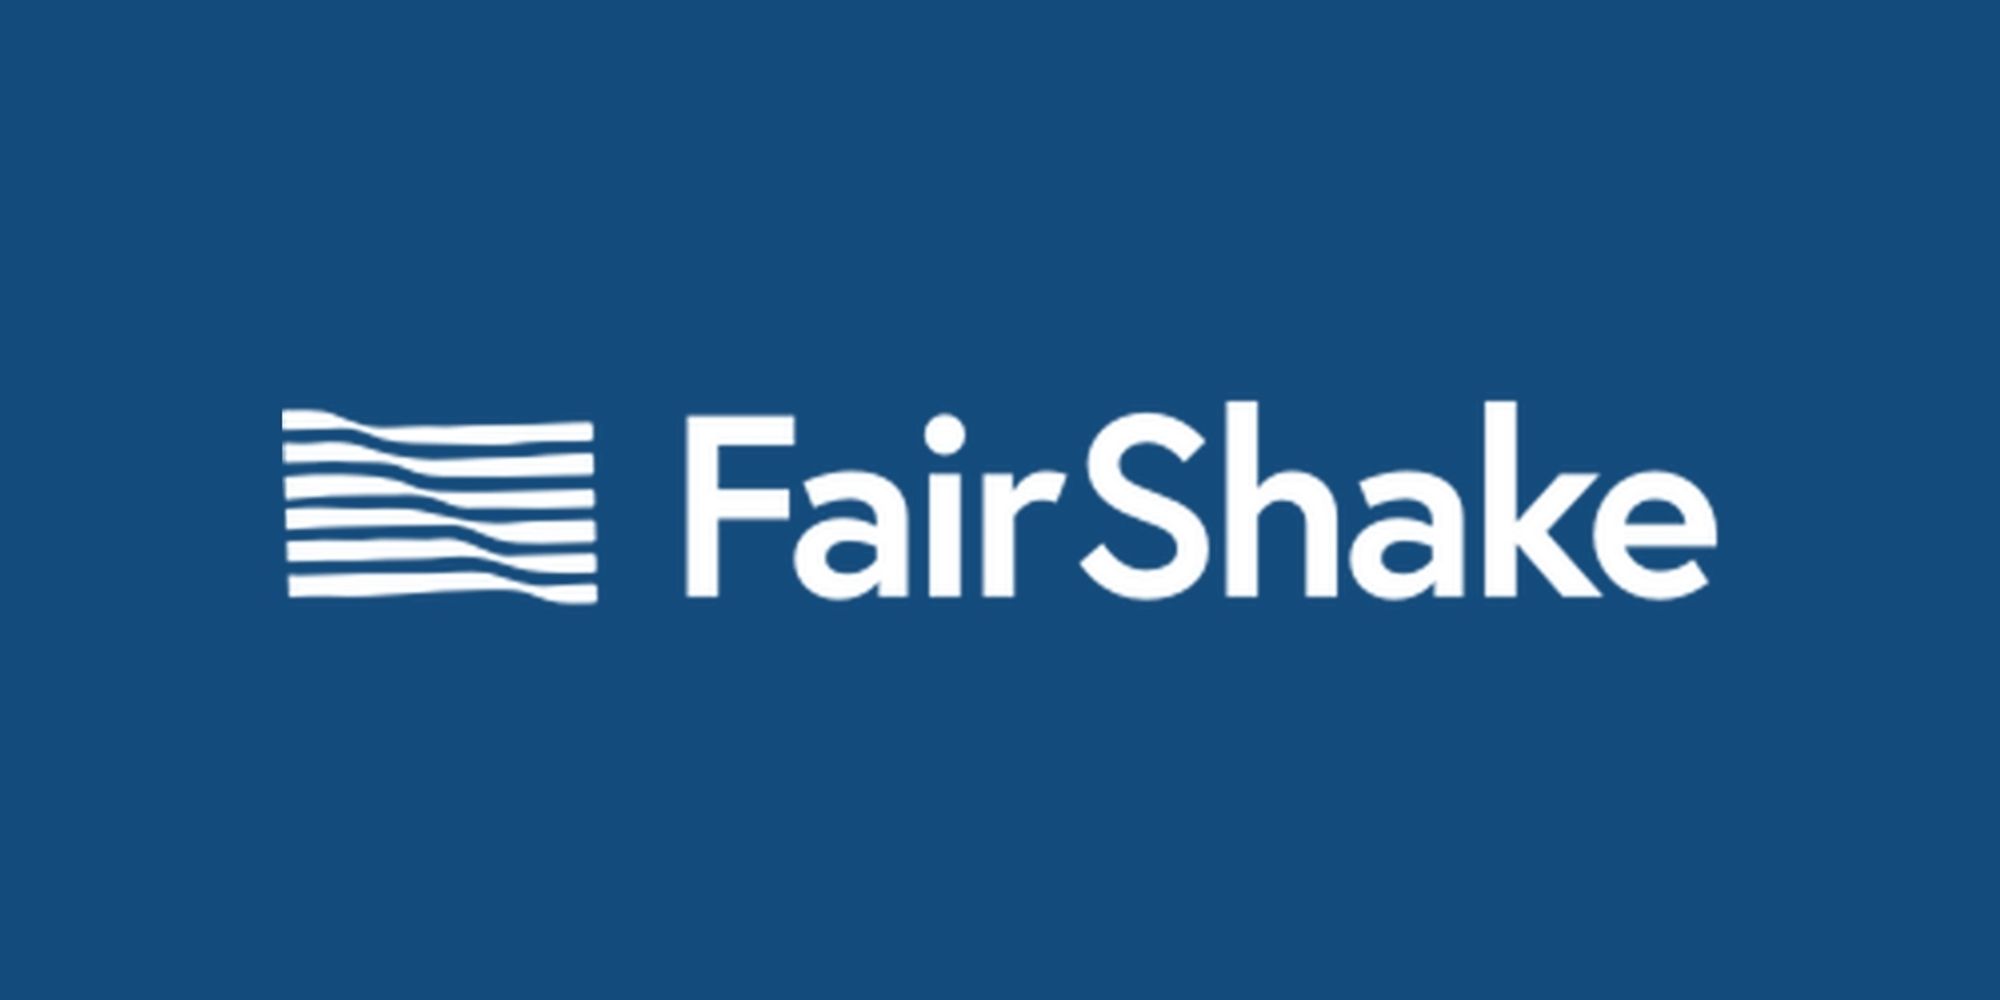 FairShake: The Consumer Rights Service